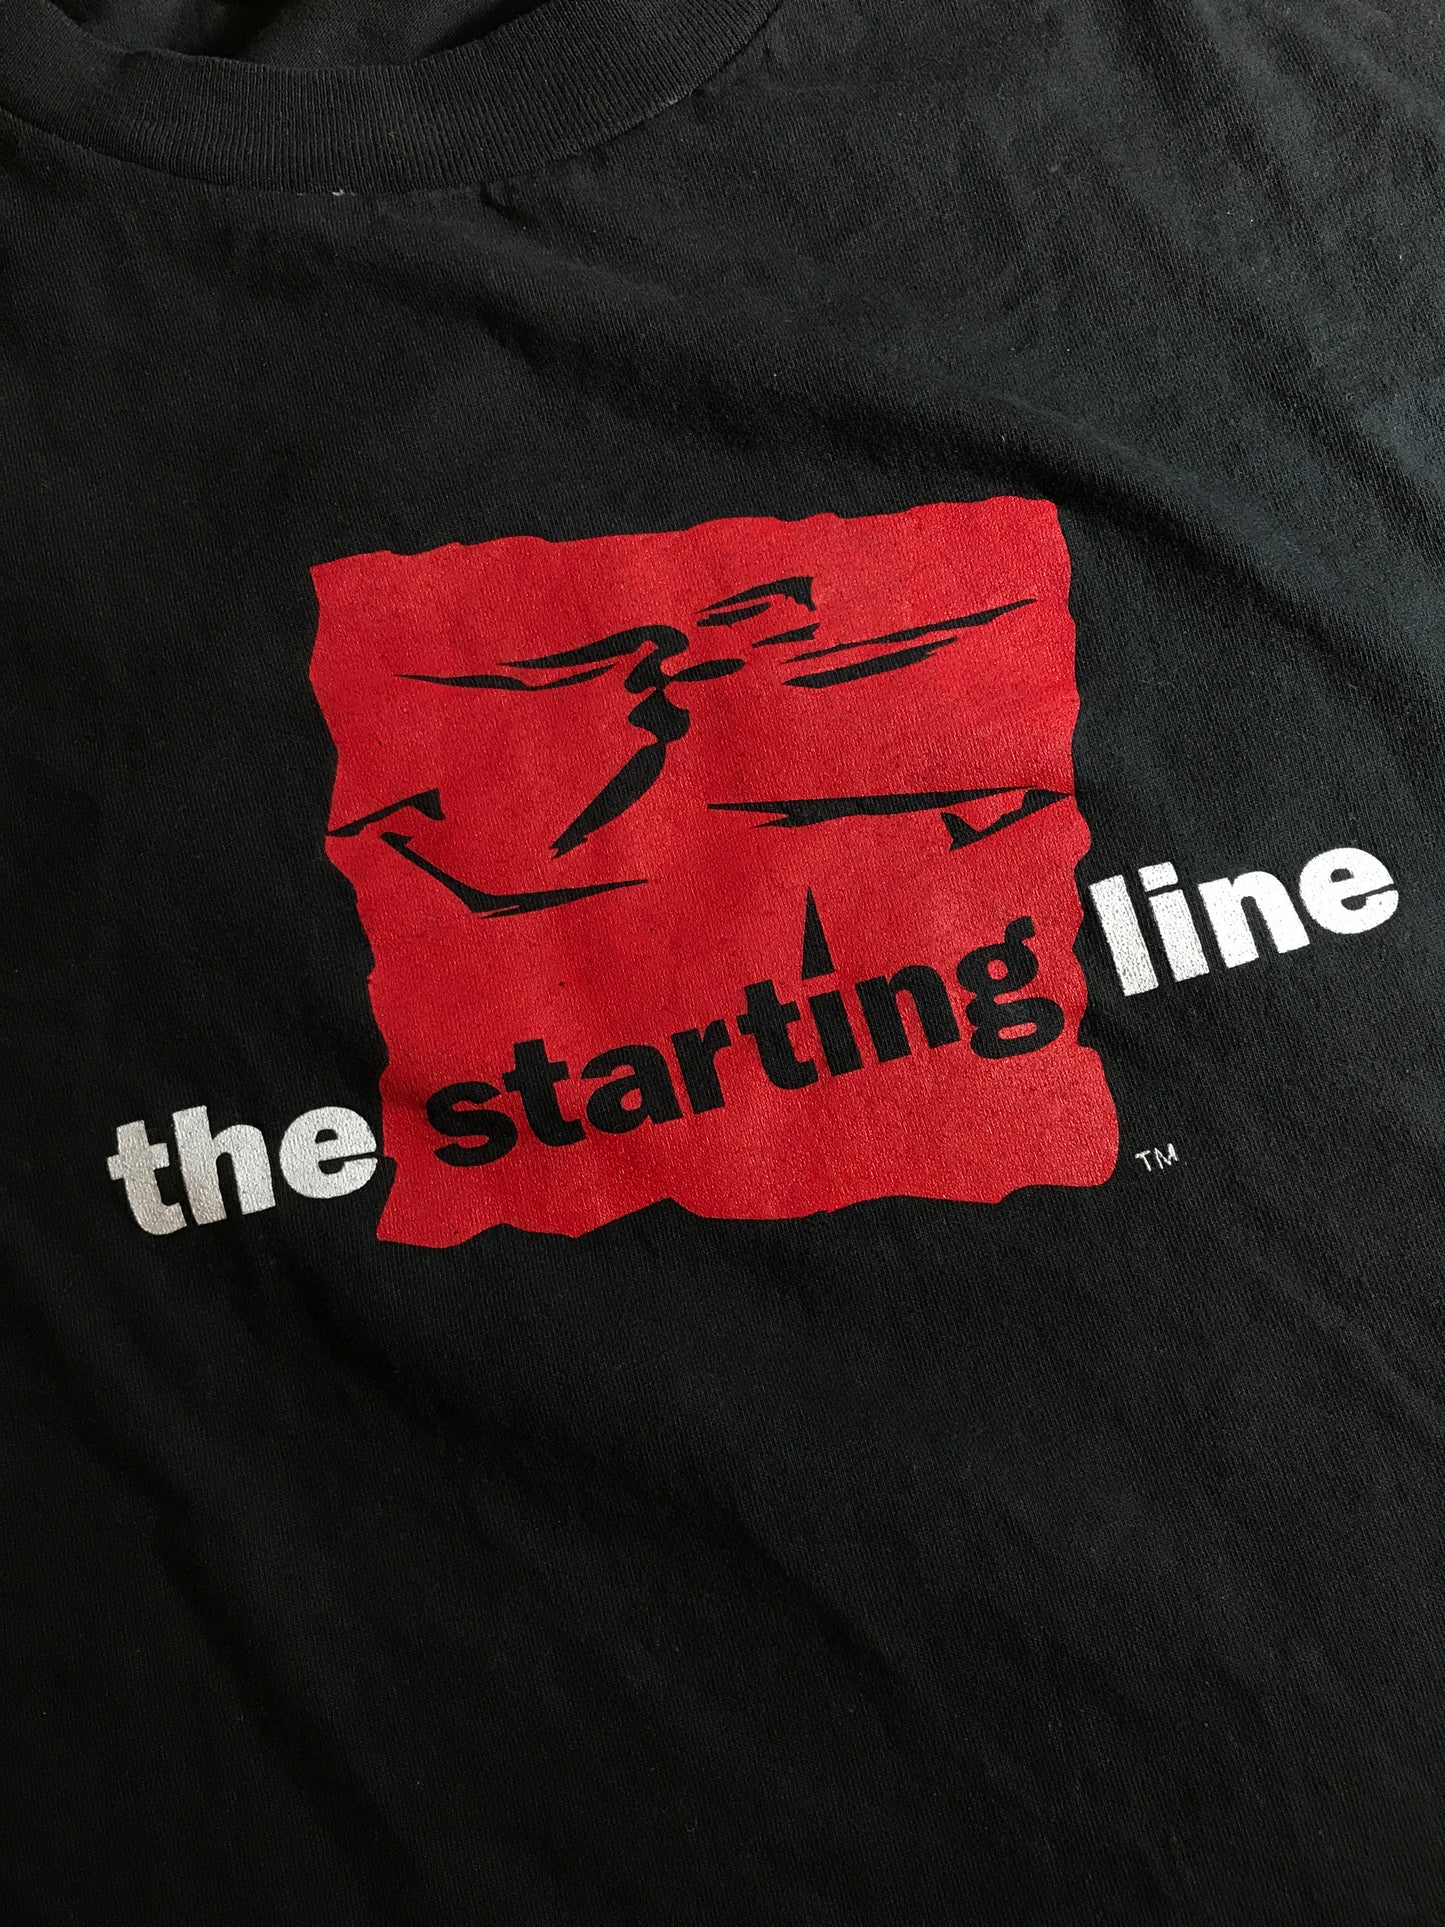 The Starting Line Vintage T-shirt